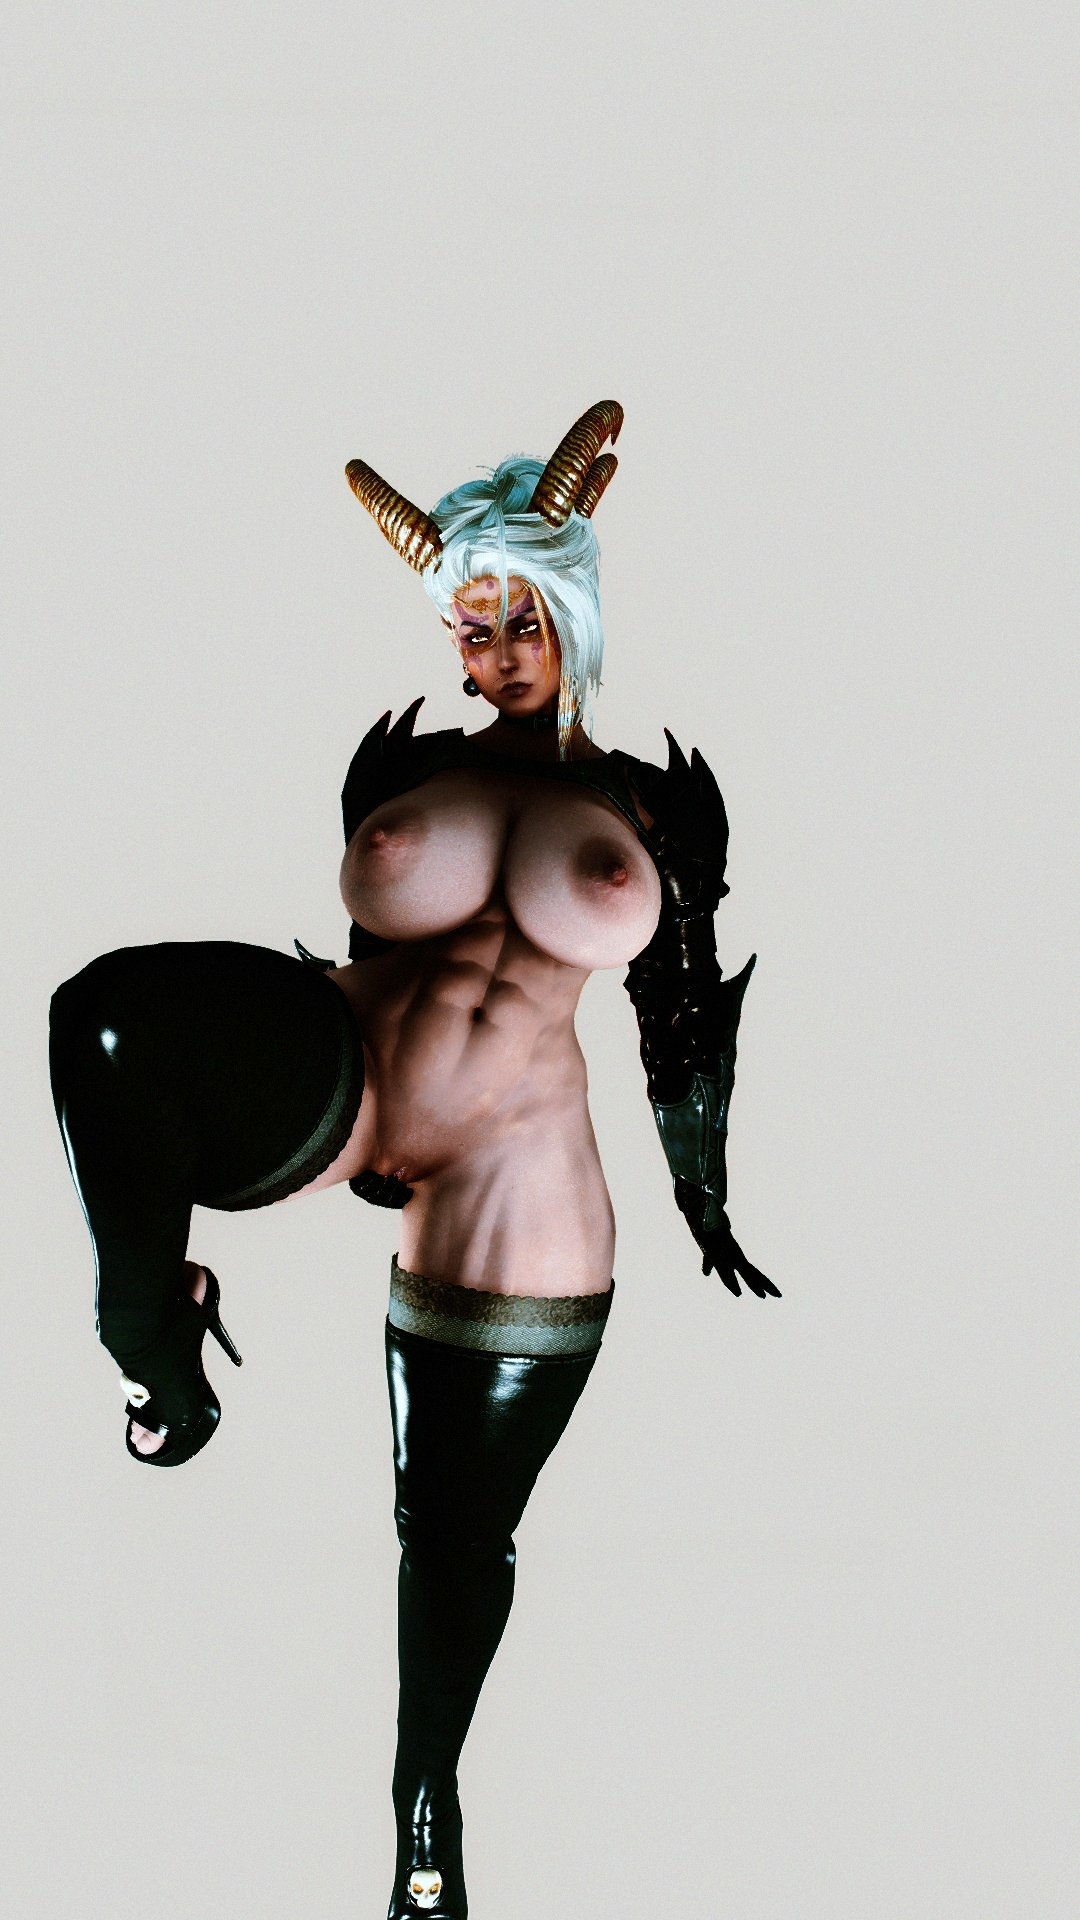 Hot naked demon girl - Skyrim Sexy Modding Skyrim Demon Big Girl Muscular Girl Muscles Pose Horns Monster Monstergirl Abs High Heels Nude Naked 3